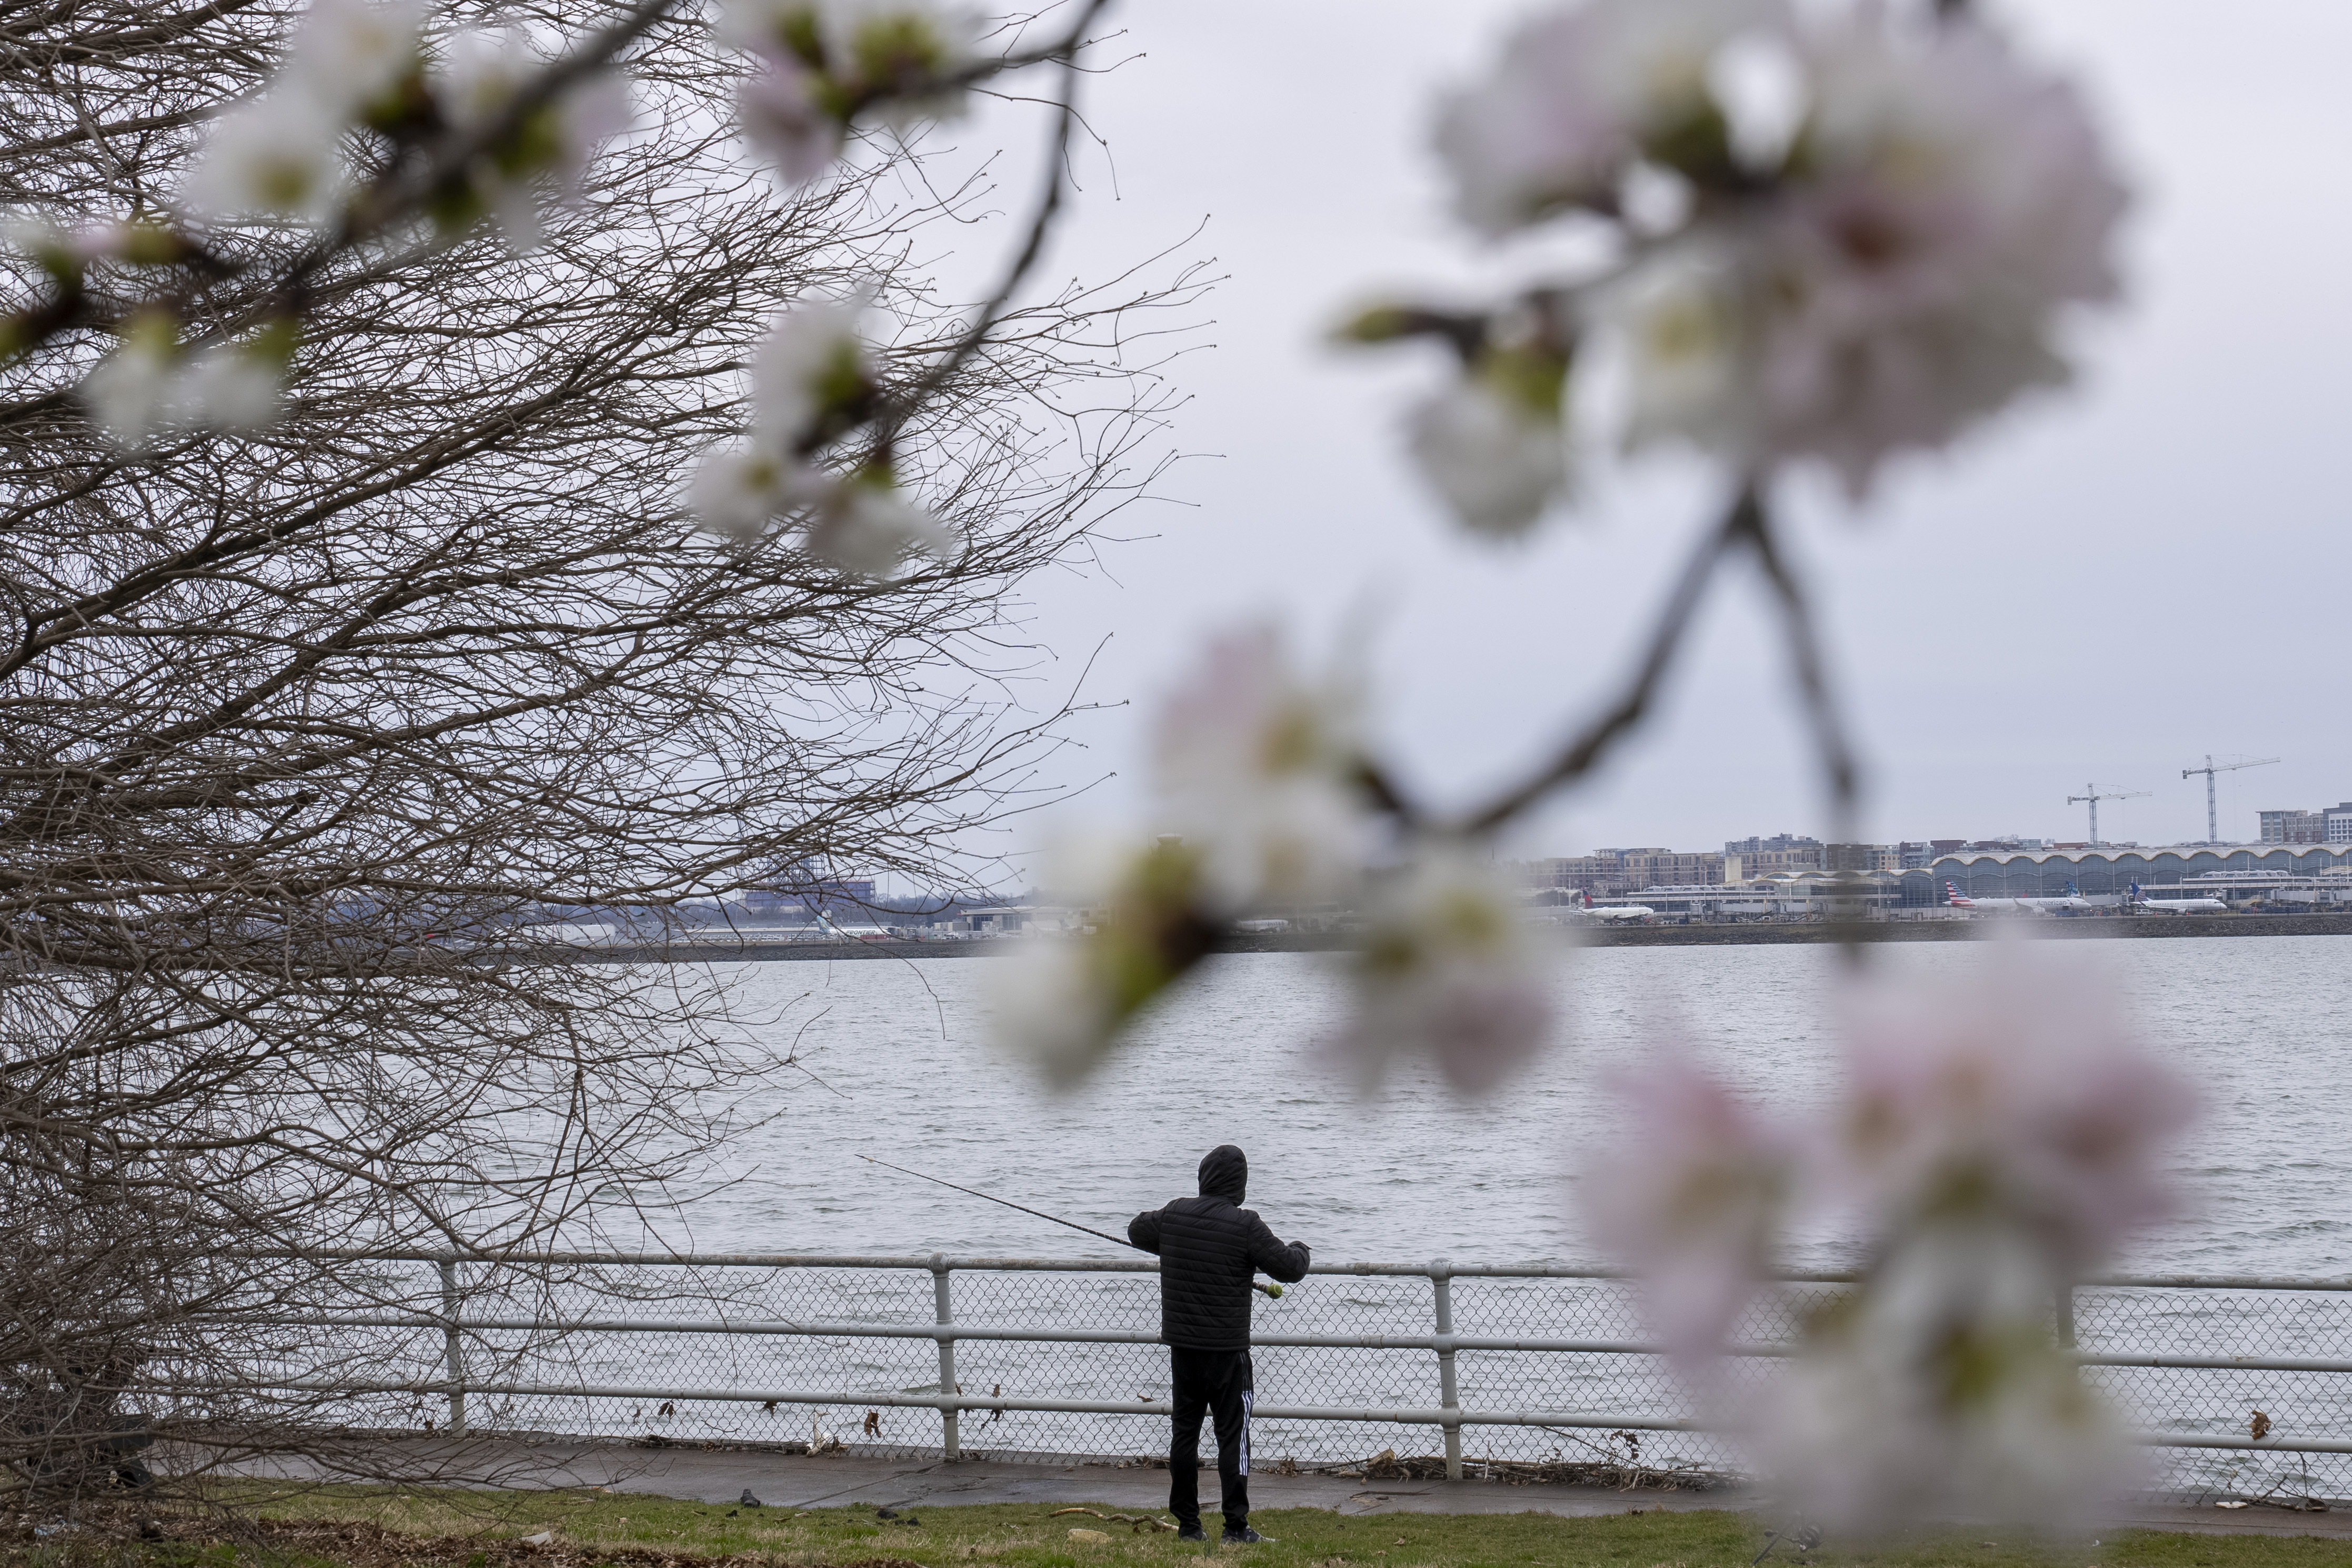 How climate change could harm Washington, D.C.'s cherry blossoms